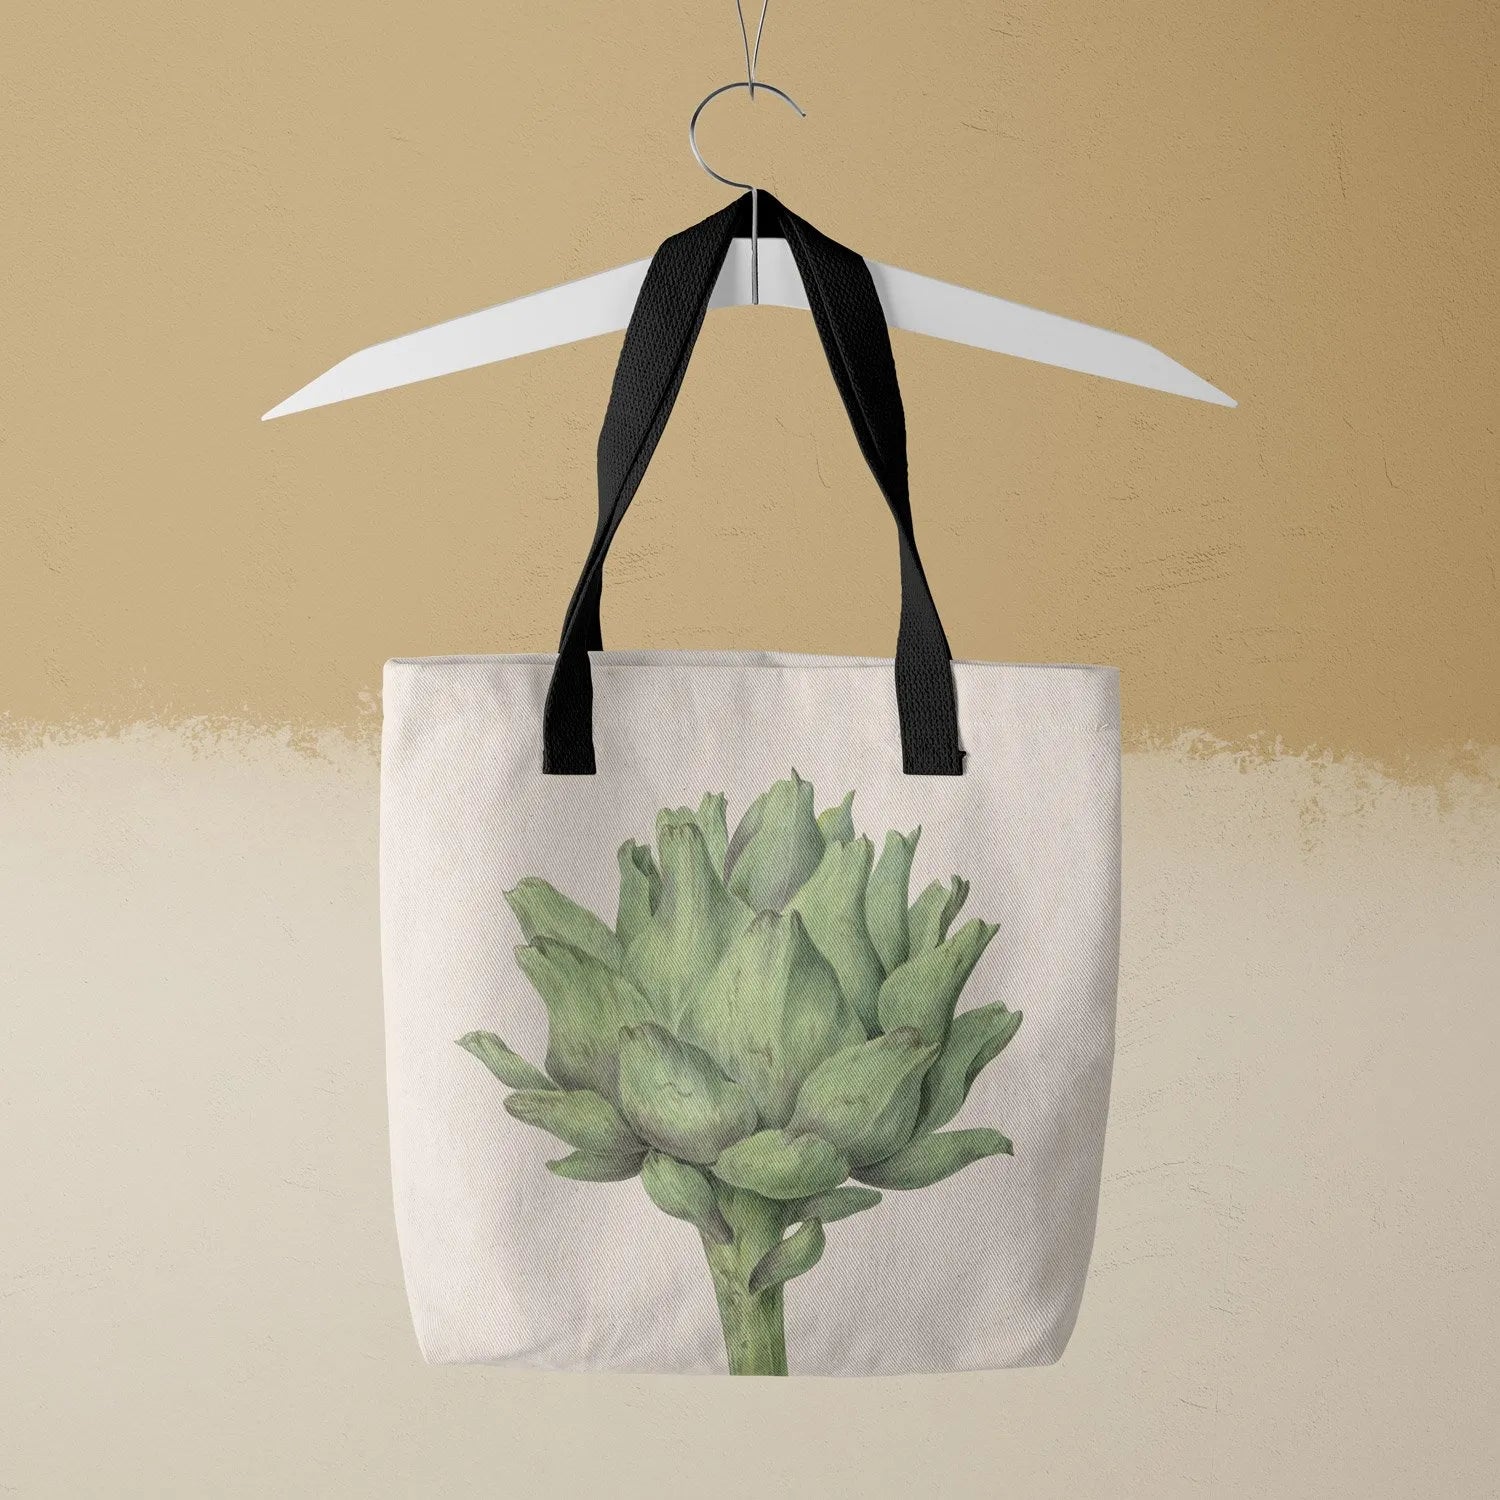 Heartichoke Tote - Burnt Cream - Heavy Duty Reusable Grocery Bag - Black Handles - Tote Bags - Aesthetic Art